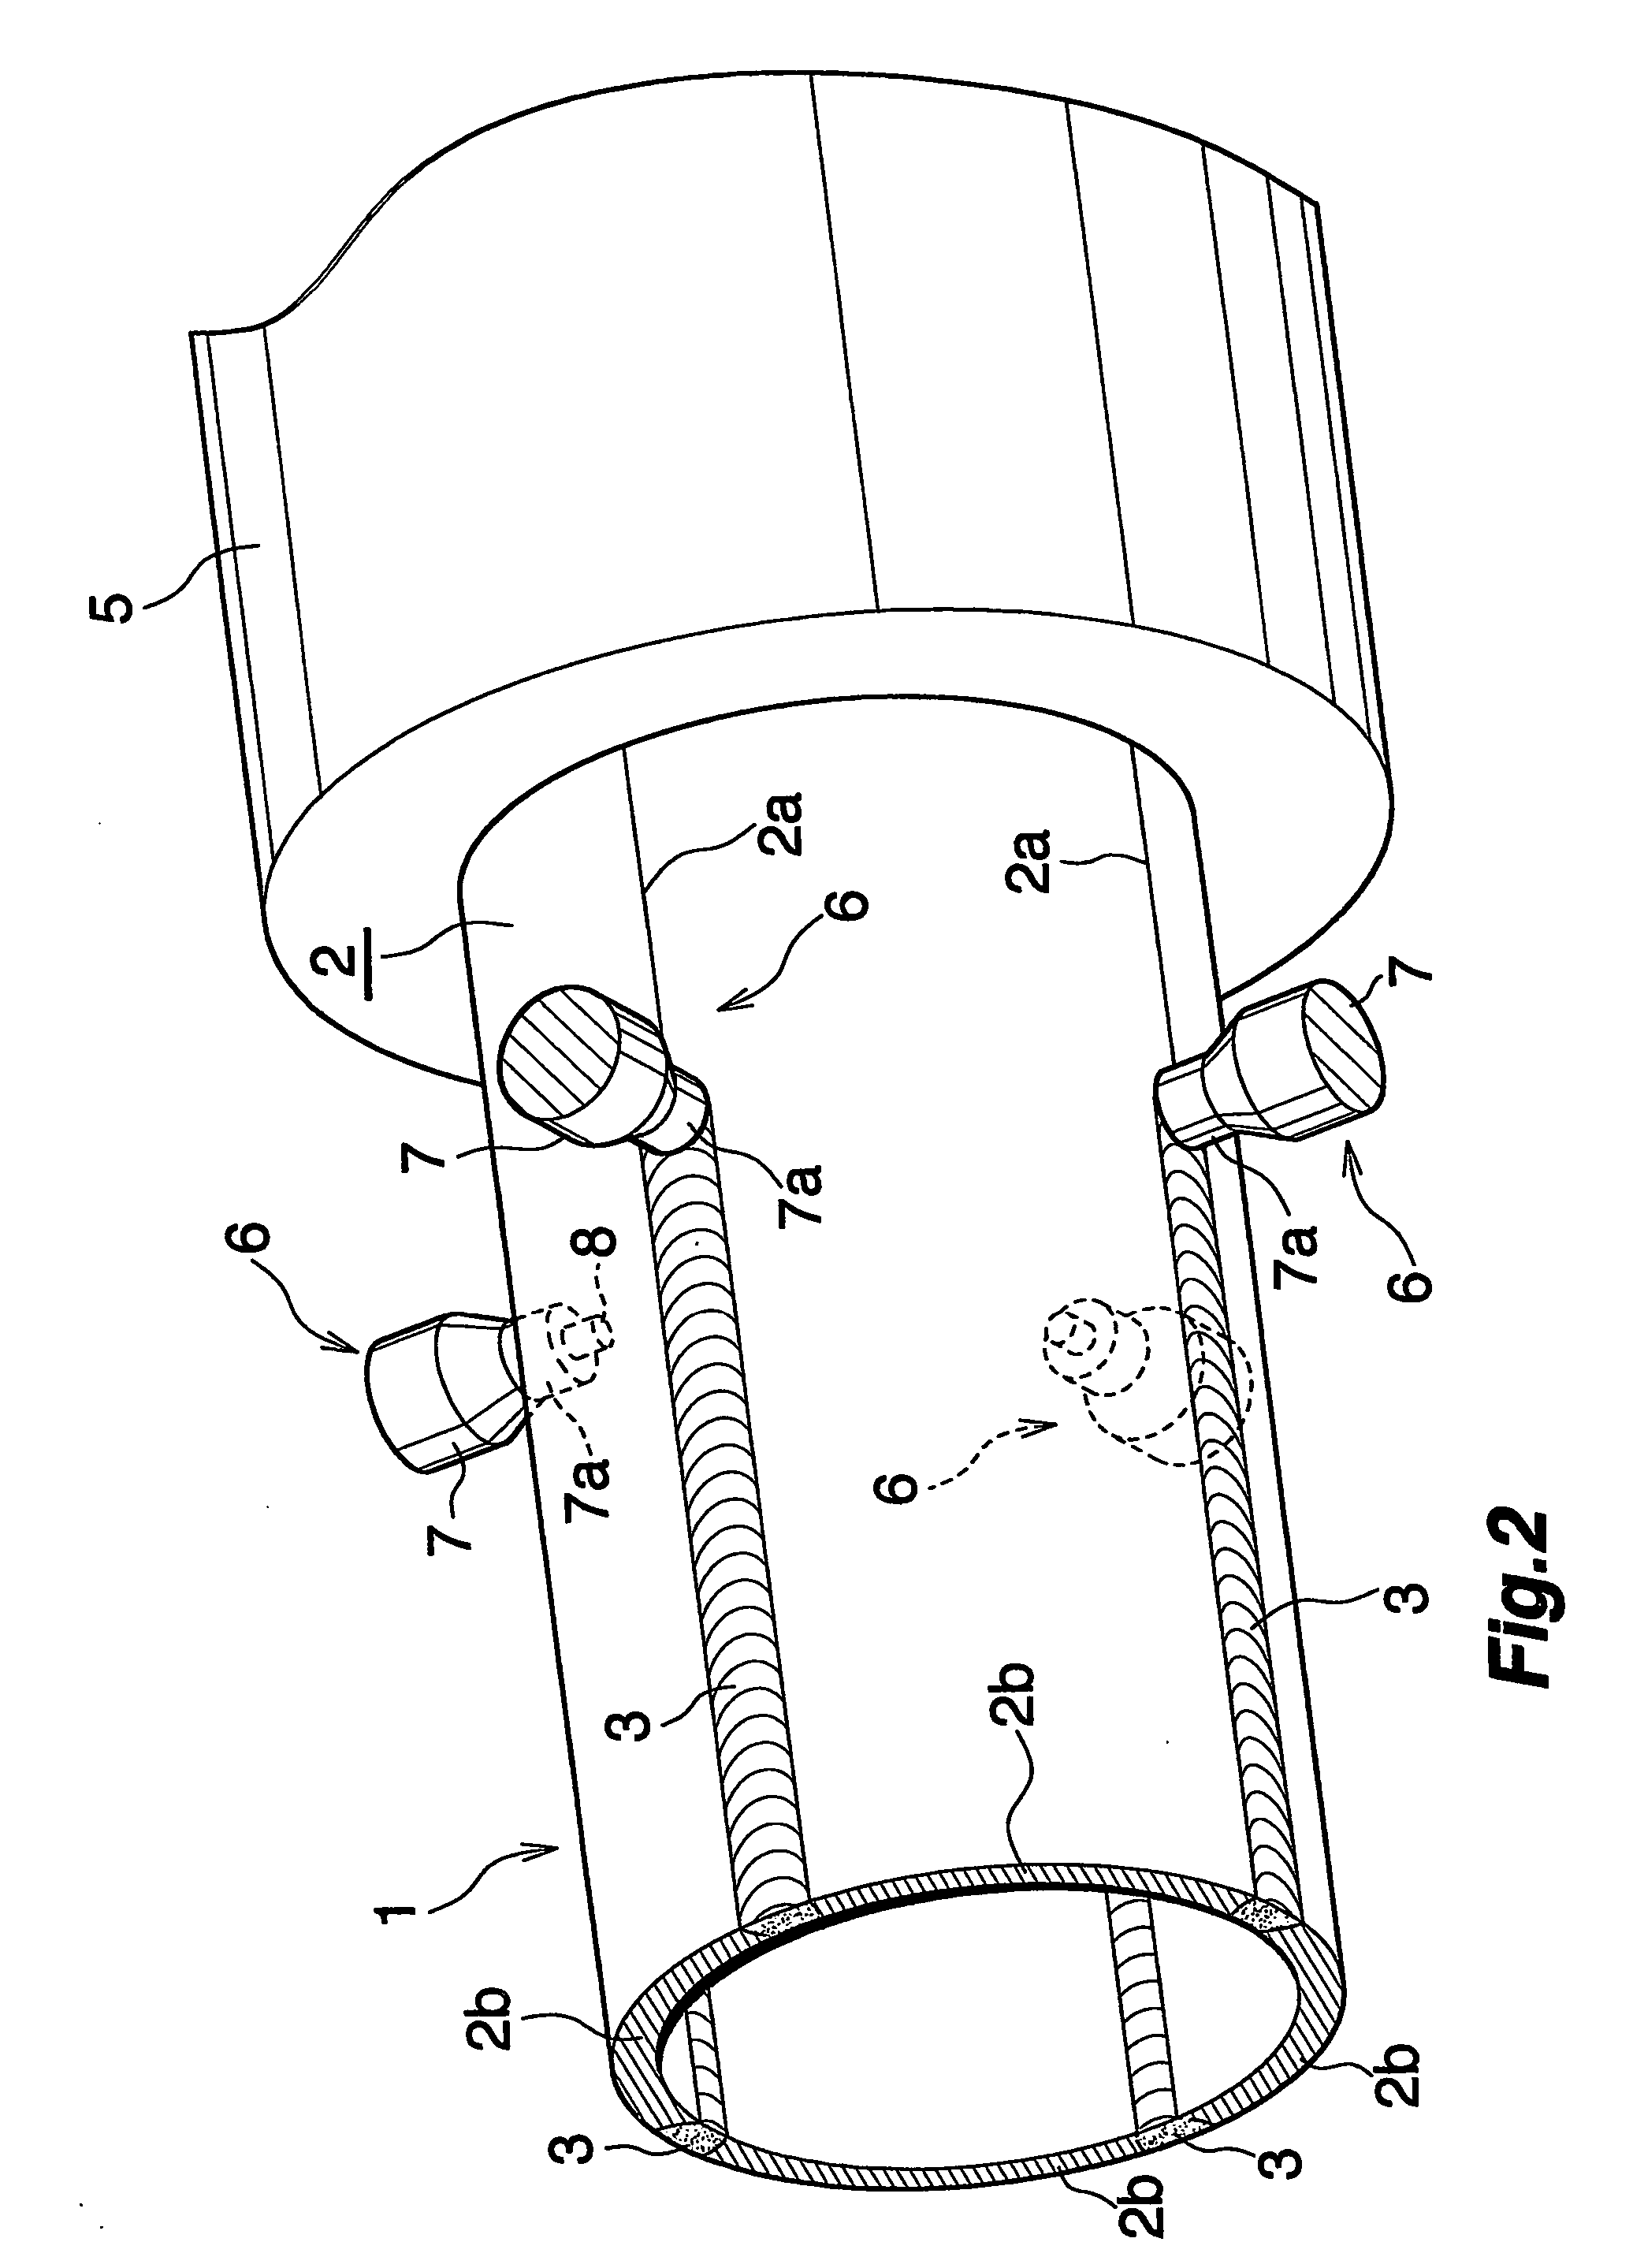 Tubular metal body, method of producing same, liner for pressure vessel and method of producing same